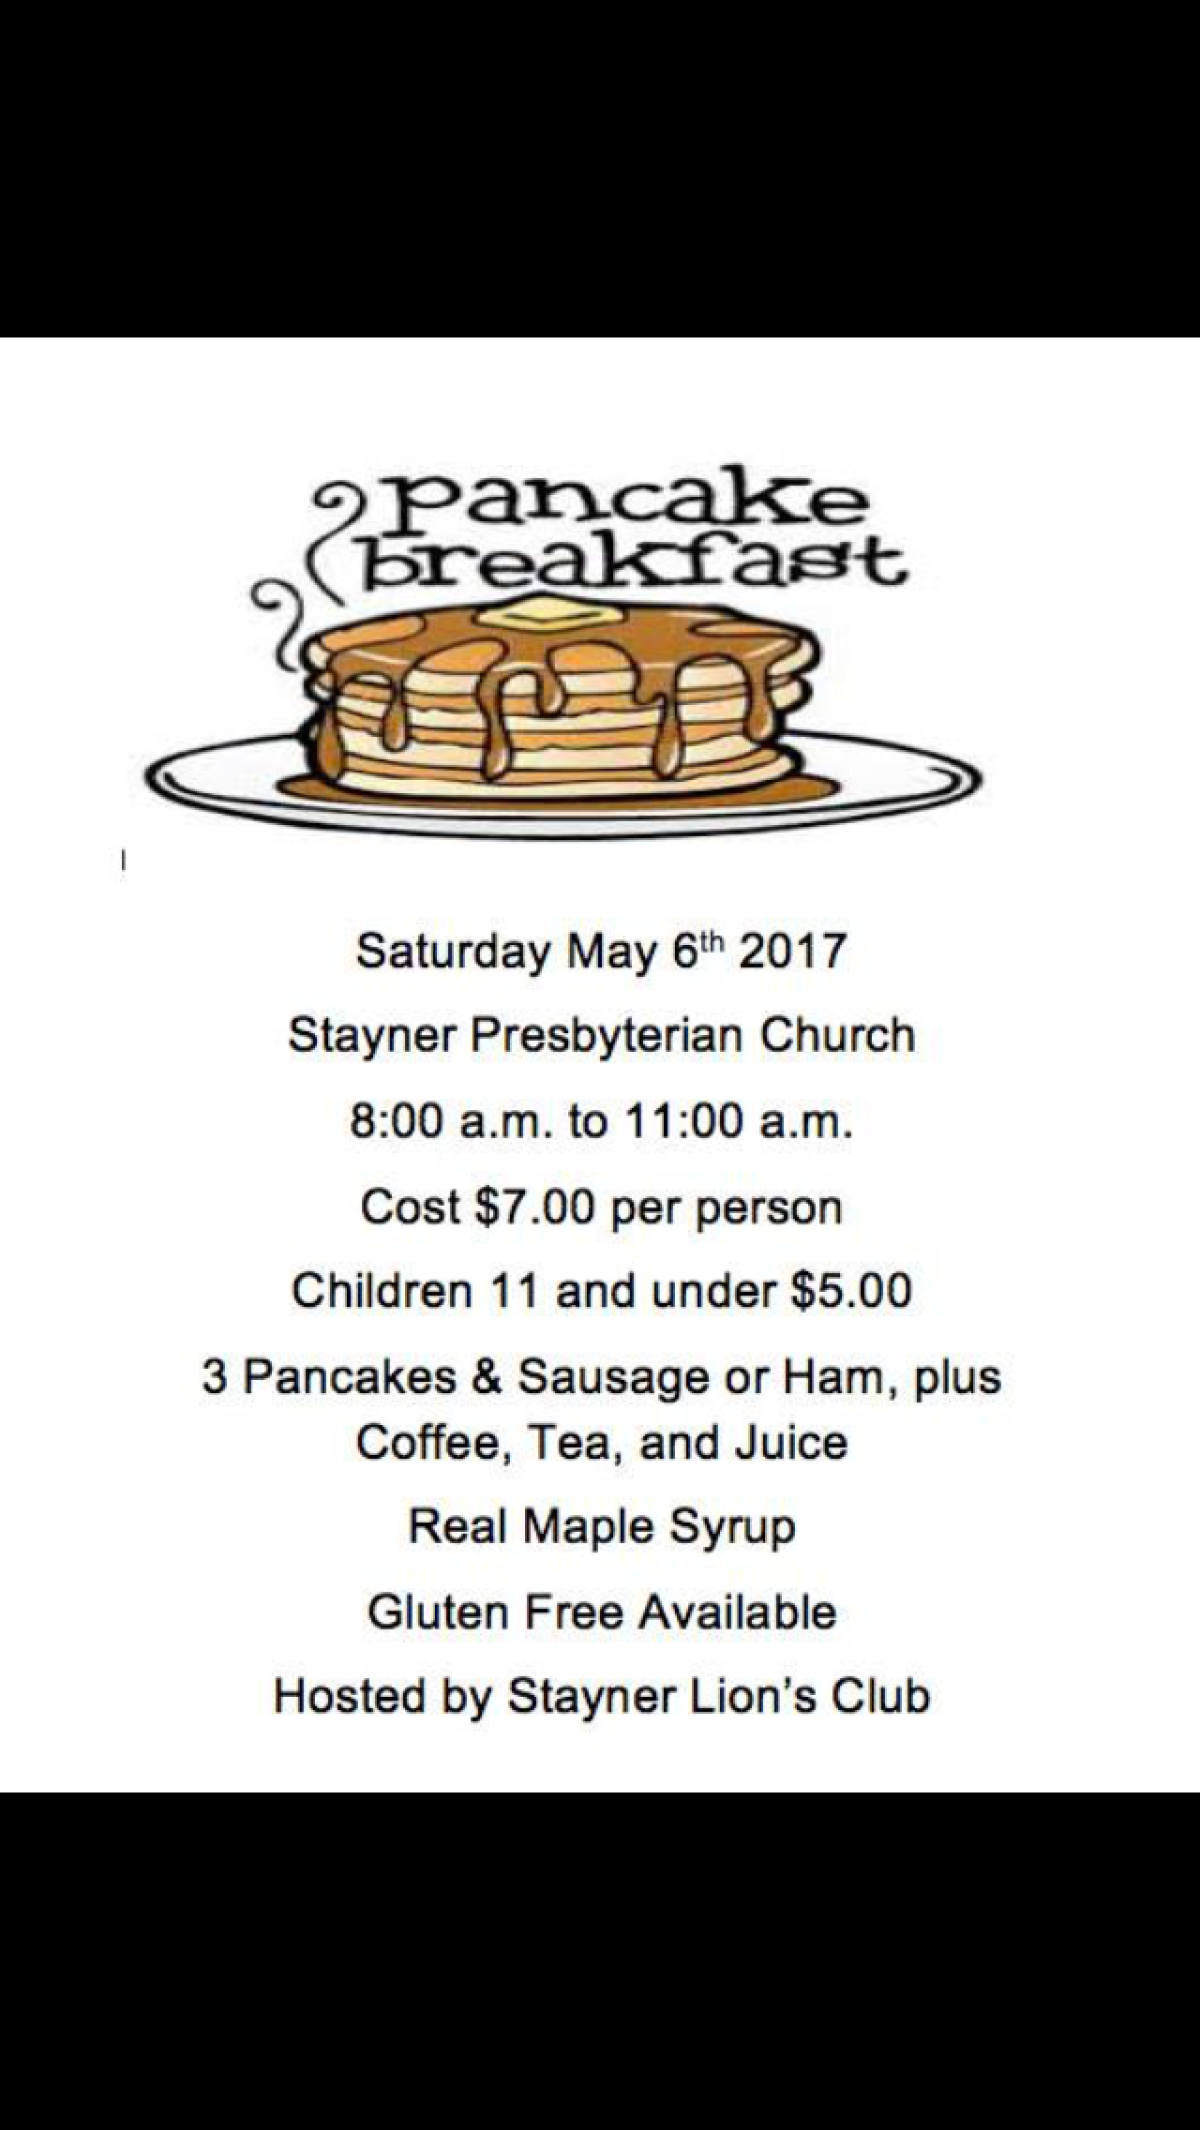 Pancake breakfast may 6th